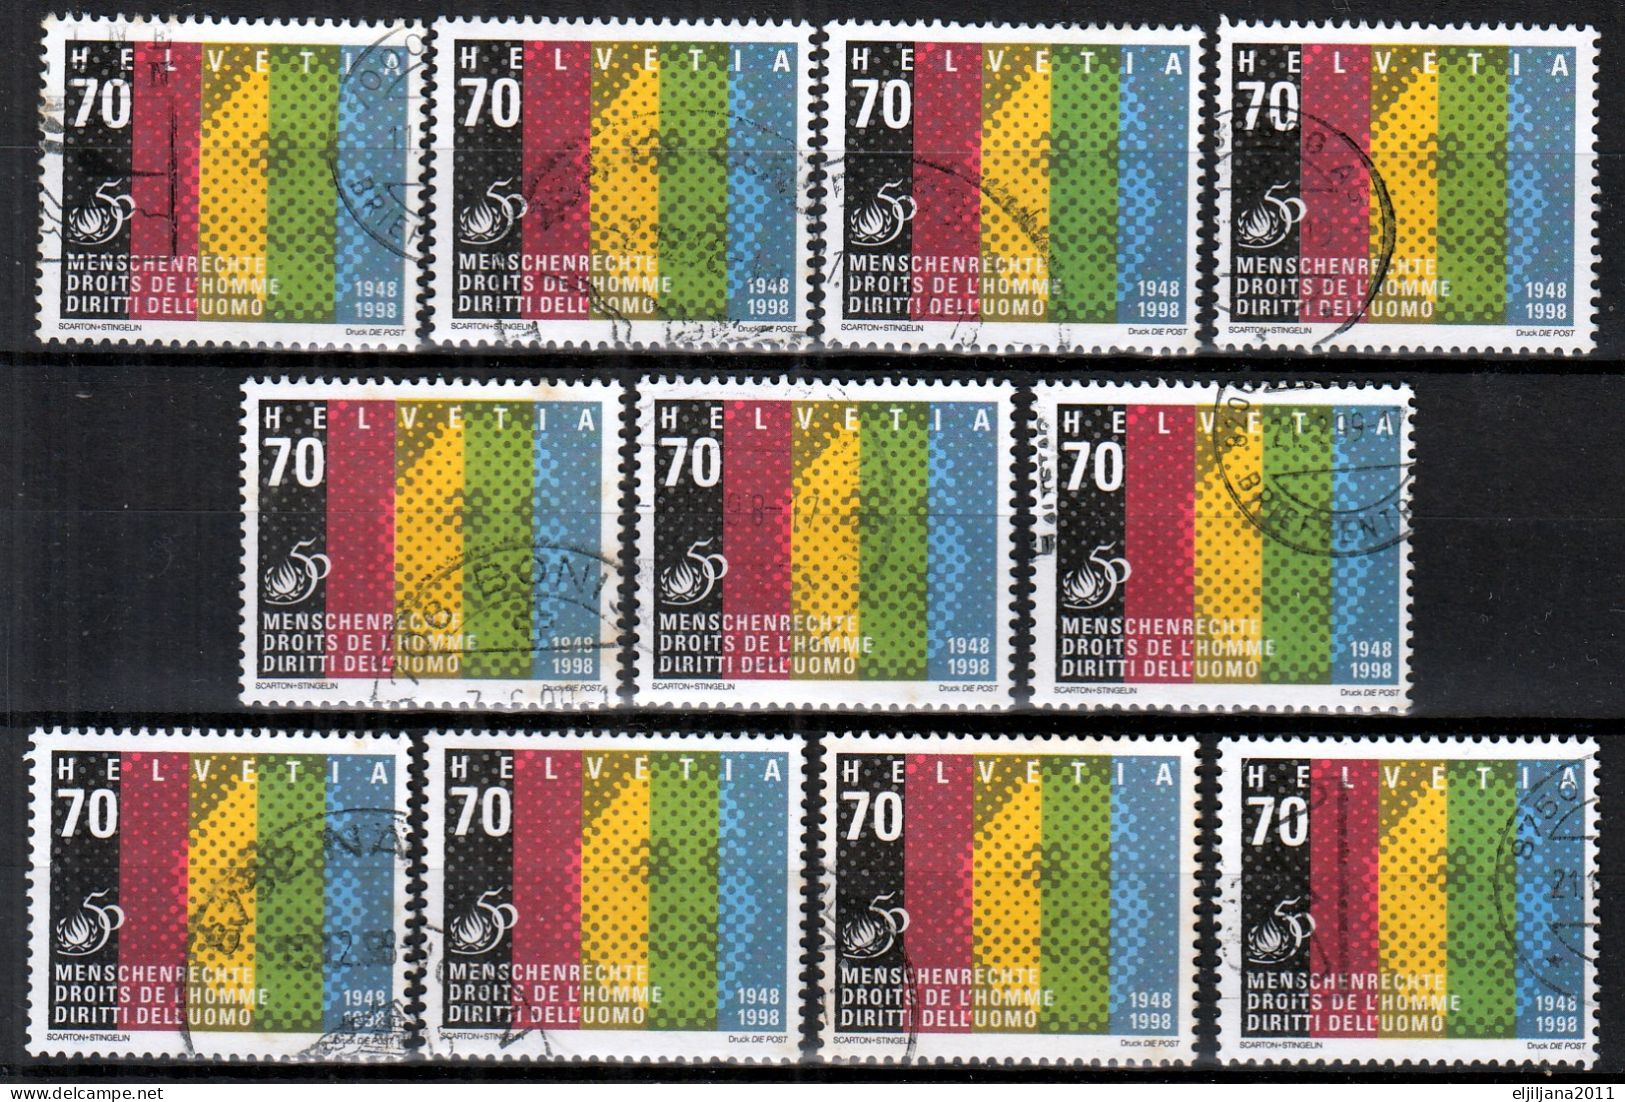 Switzerland / Helvetia / Schweiz / Suisse 1998 ⁕ Human Rights Mi.1670 ⁕ 11v Used - Used Stamps